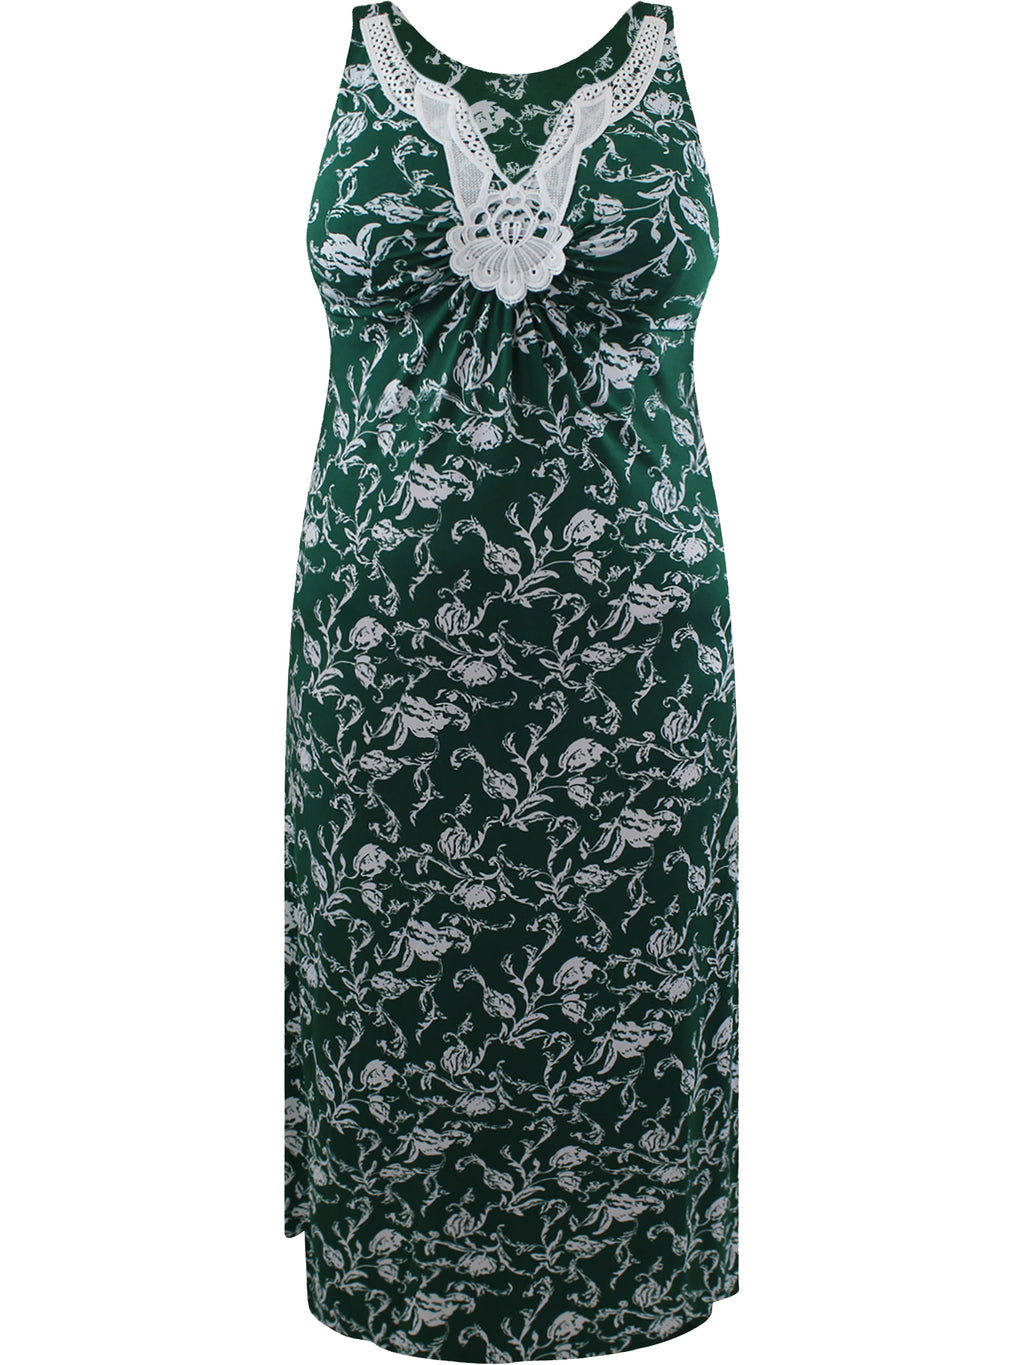 Hunter Green Plus Size Sleeveless Dress